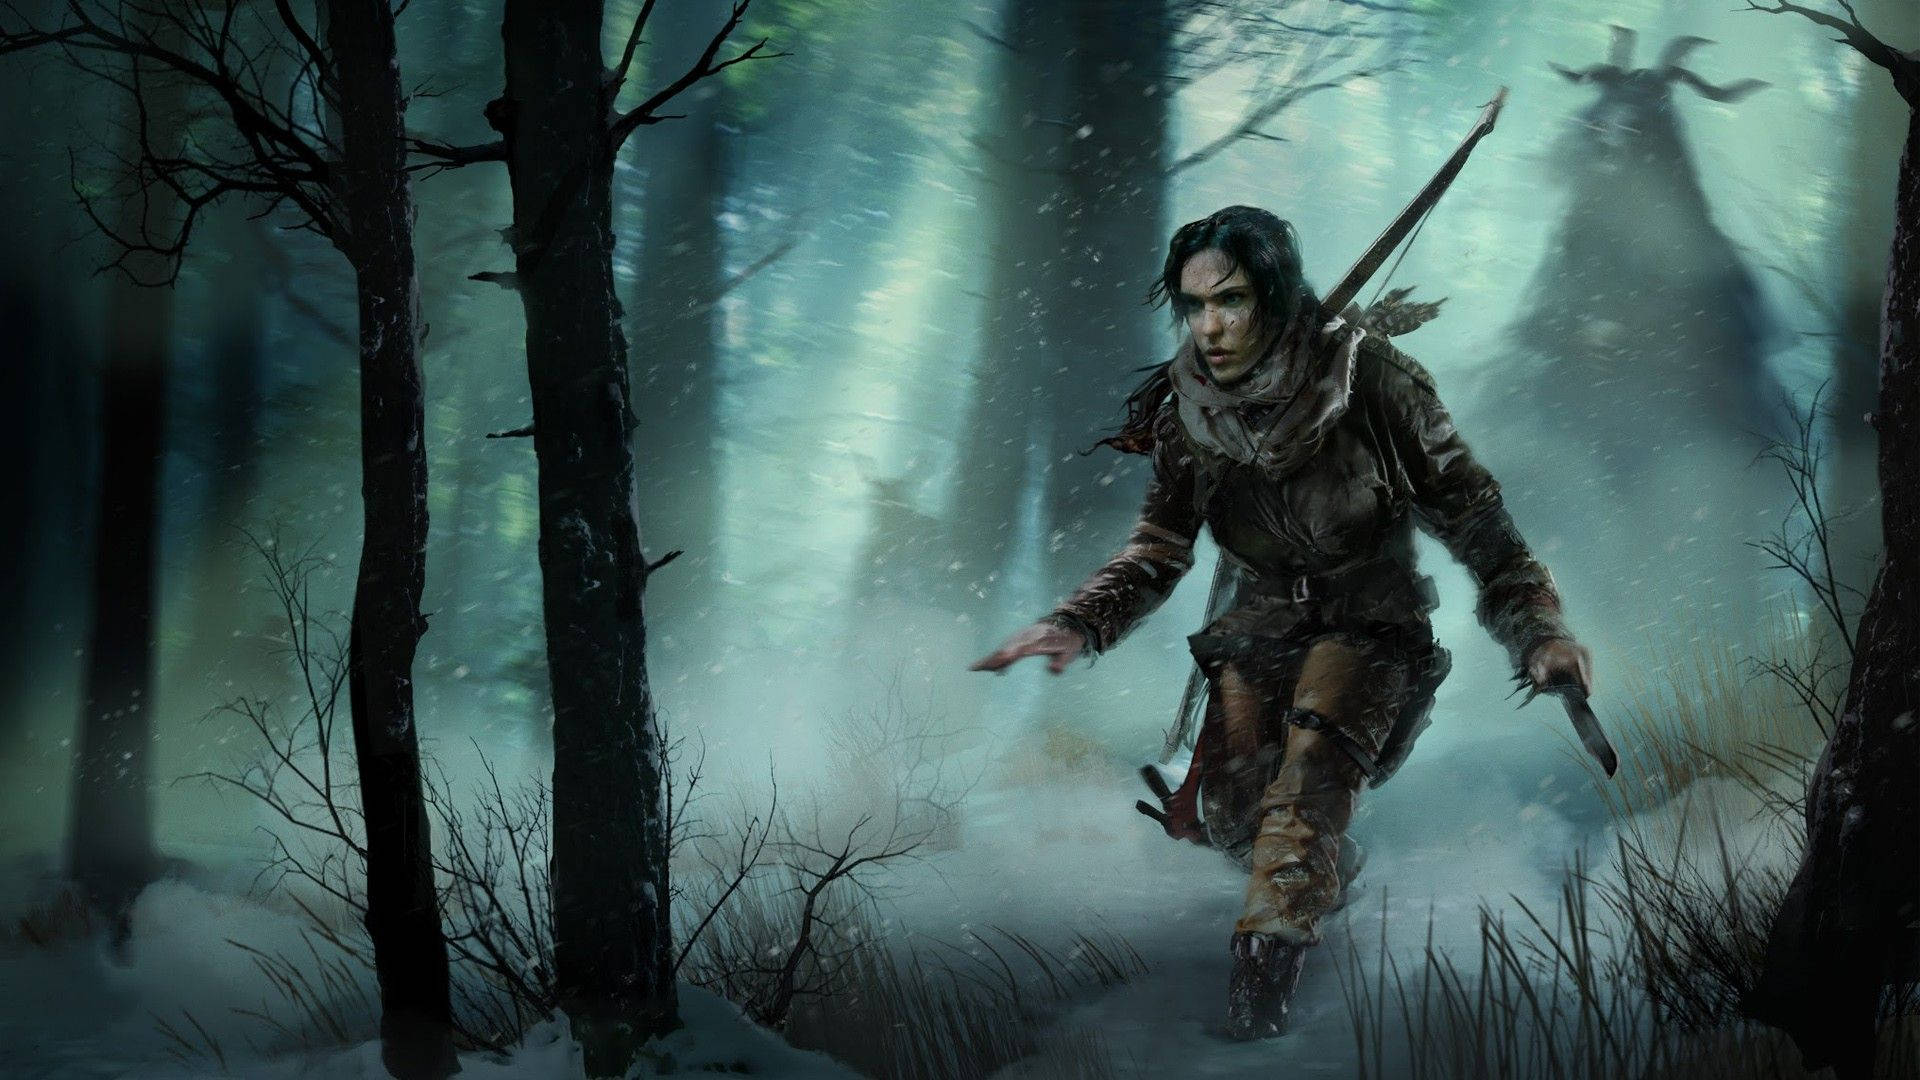 Caption: Tomb Raider Adventure Through A Winter Forest Wallpaper